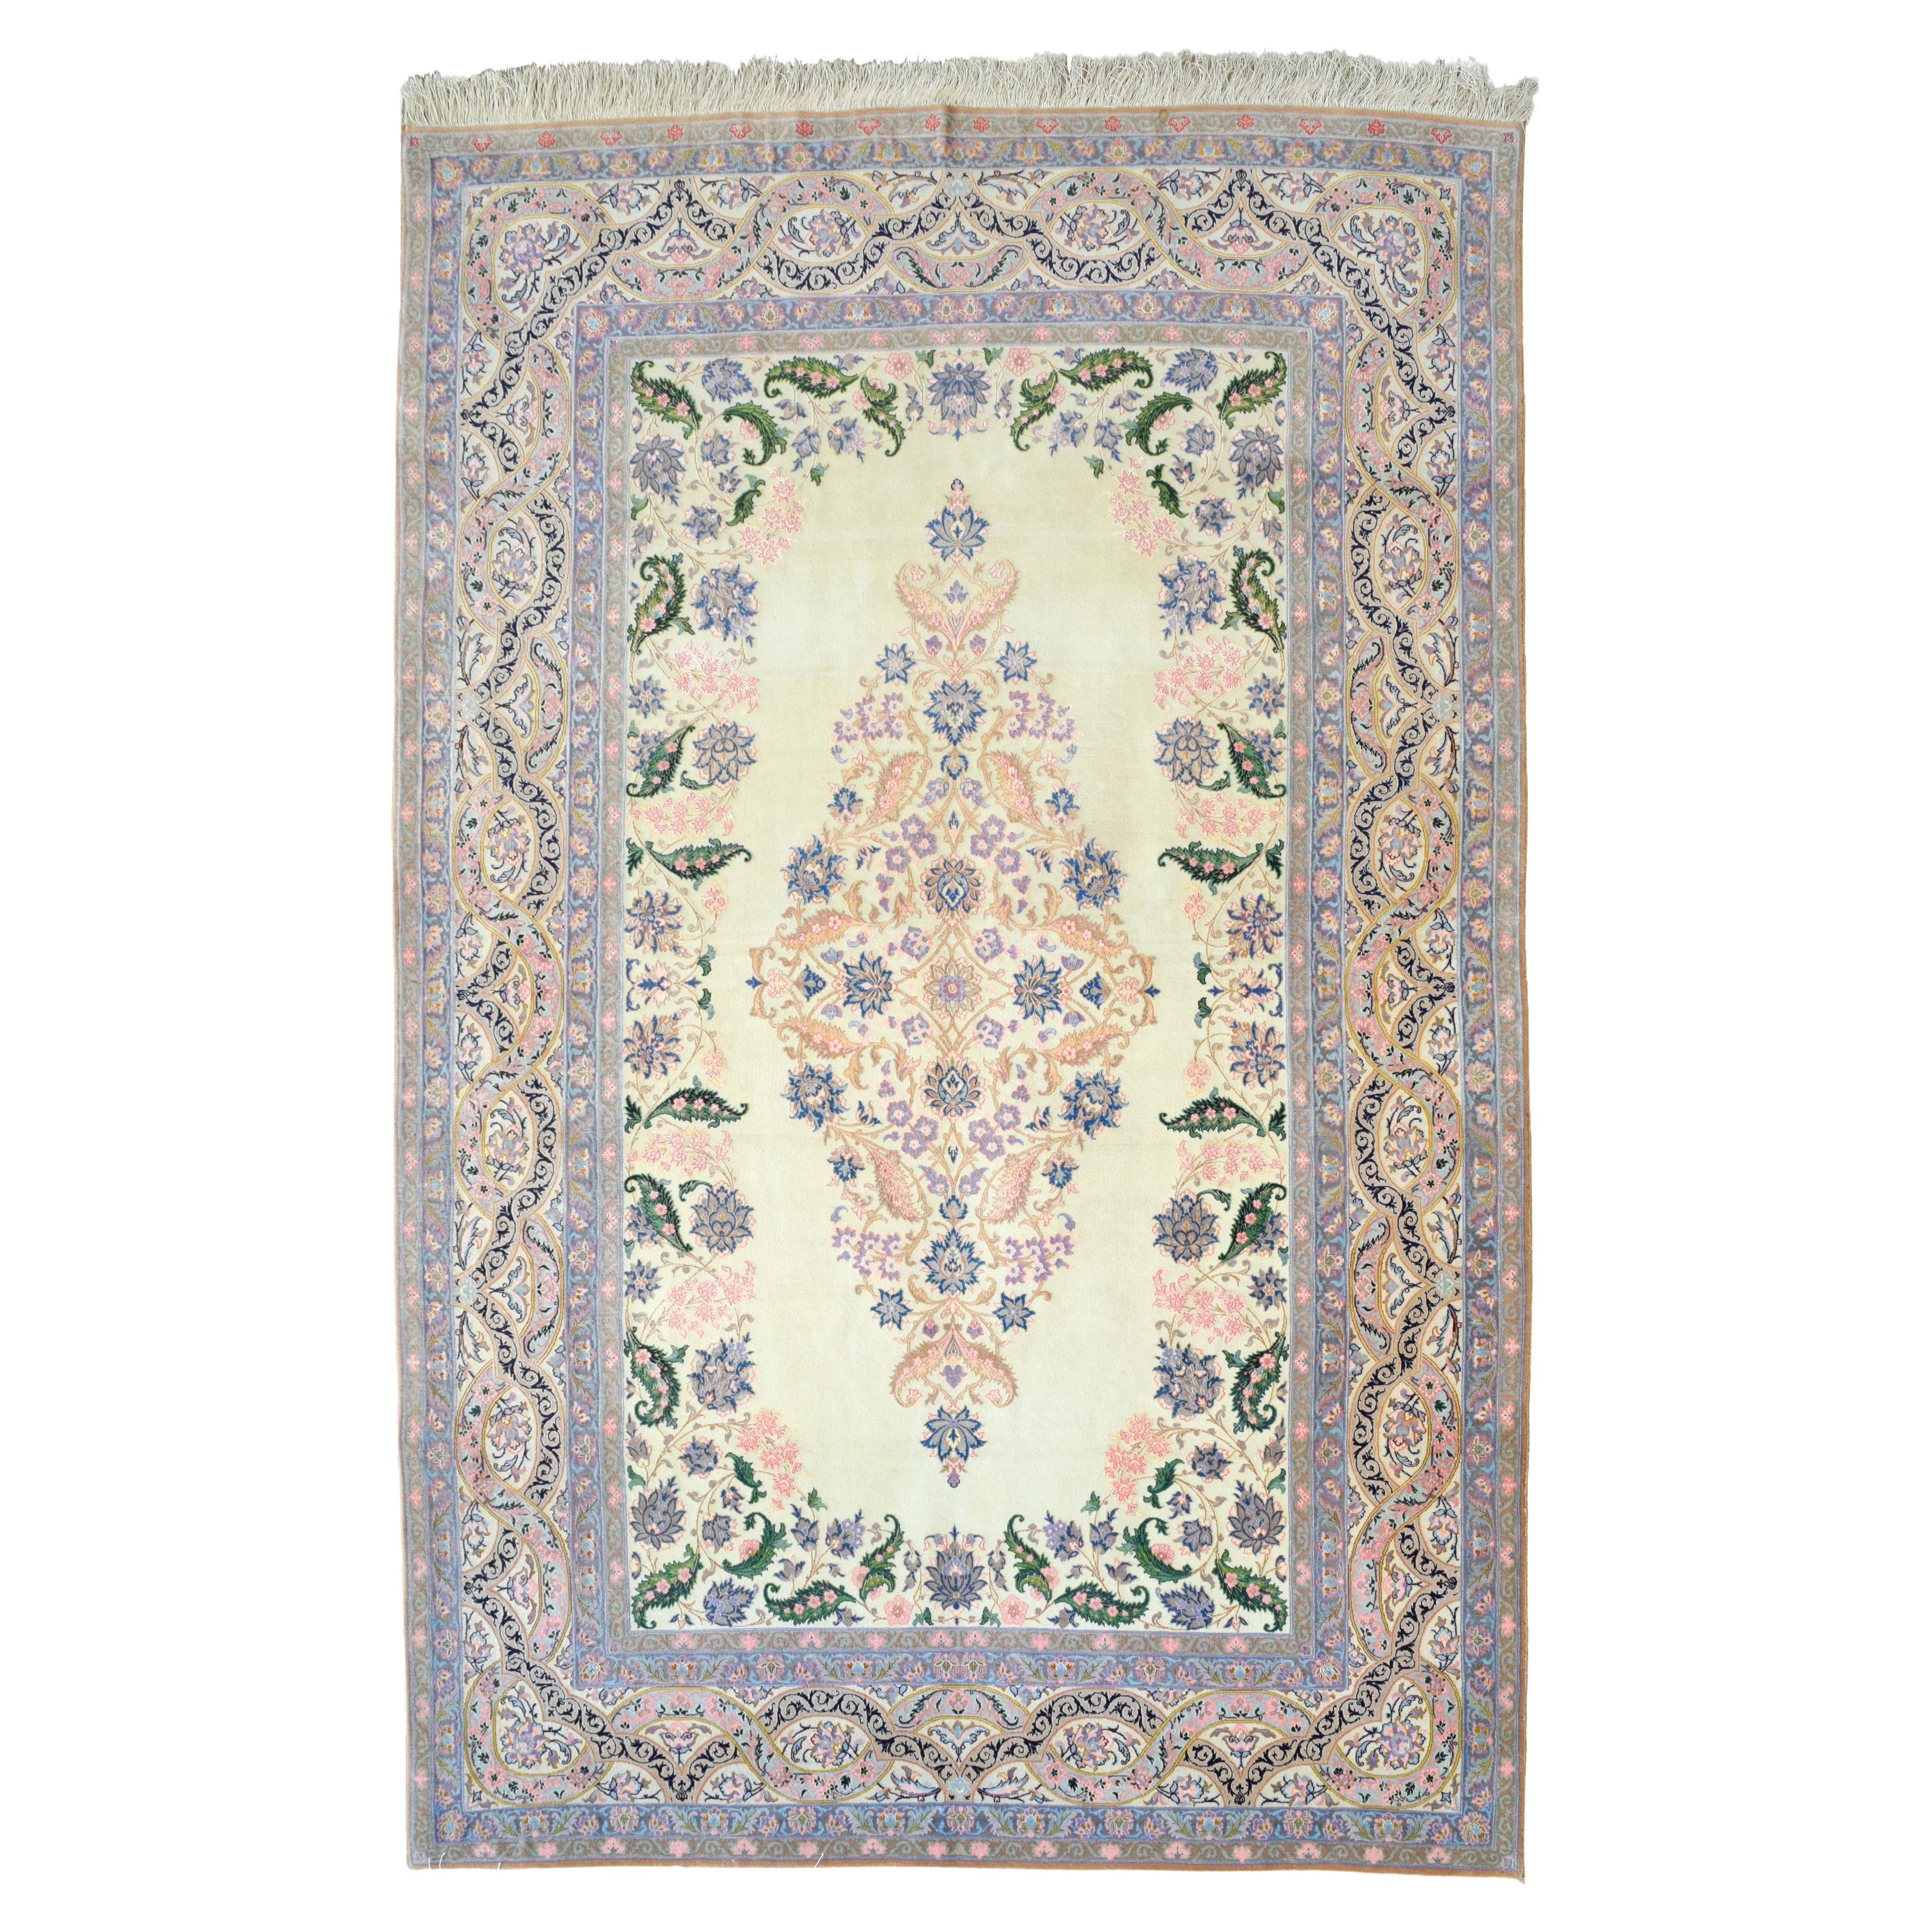 Wool and Silk Persian Isfahan Carpet, Purple and Pink